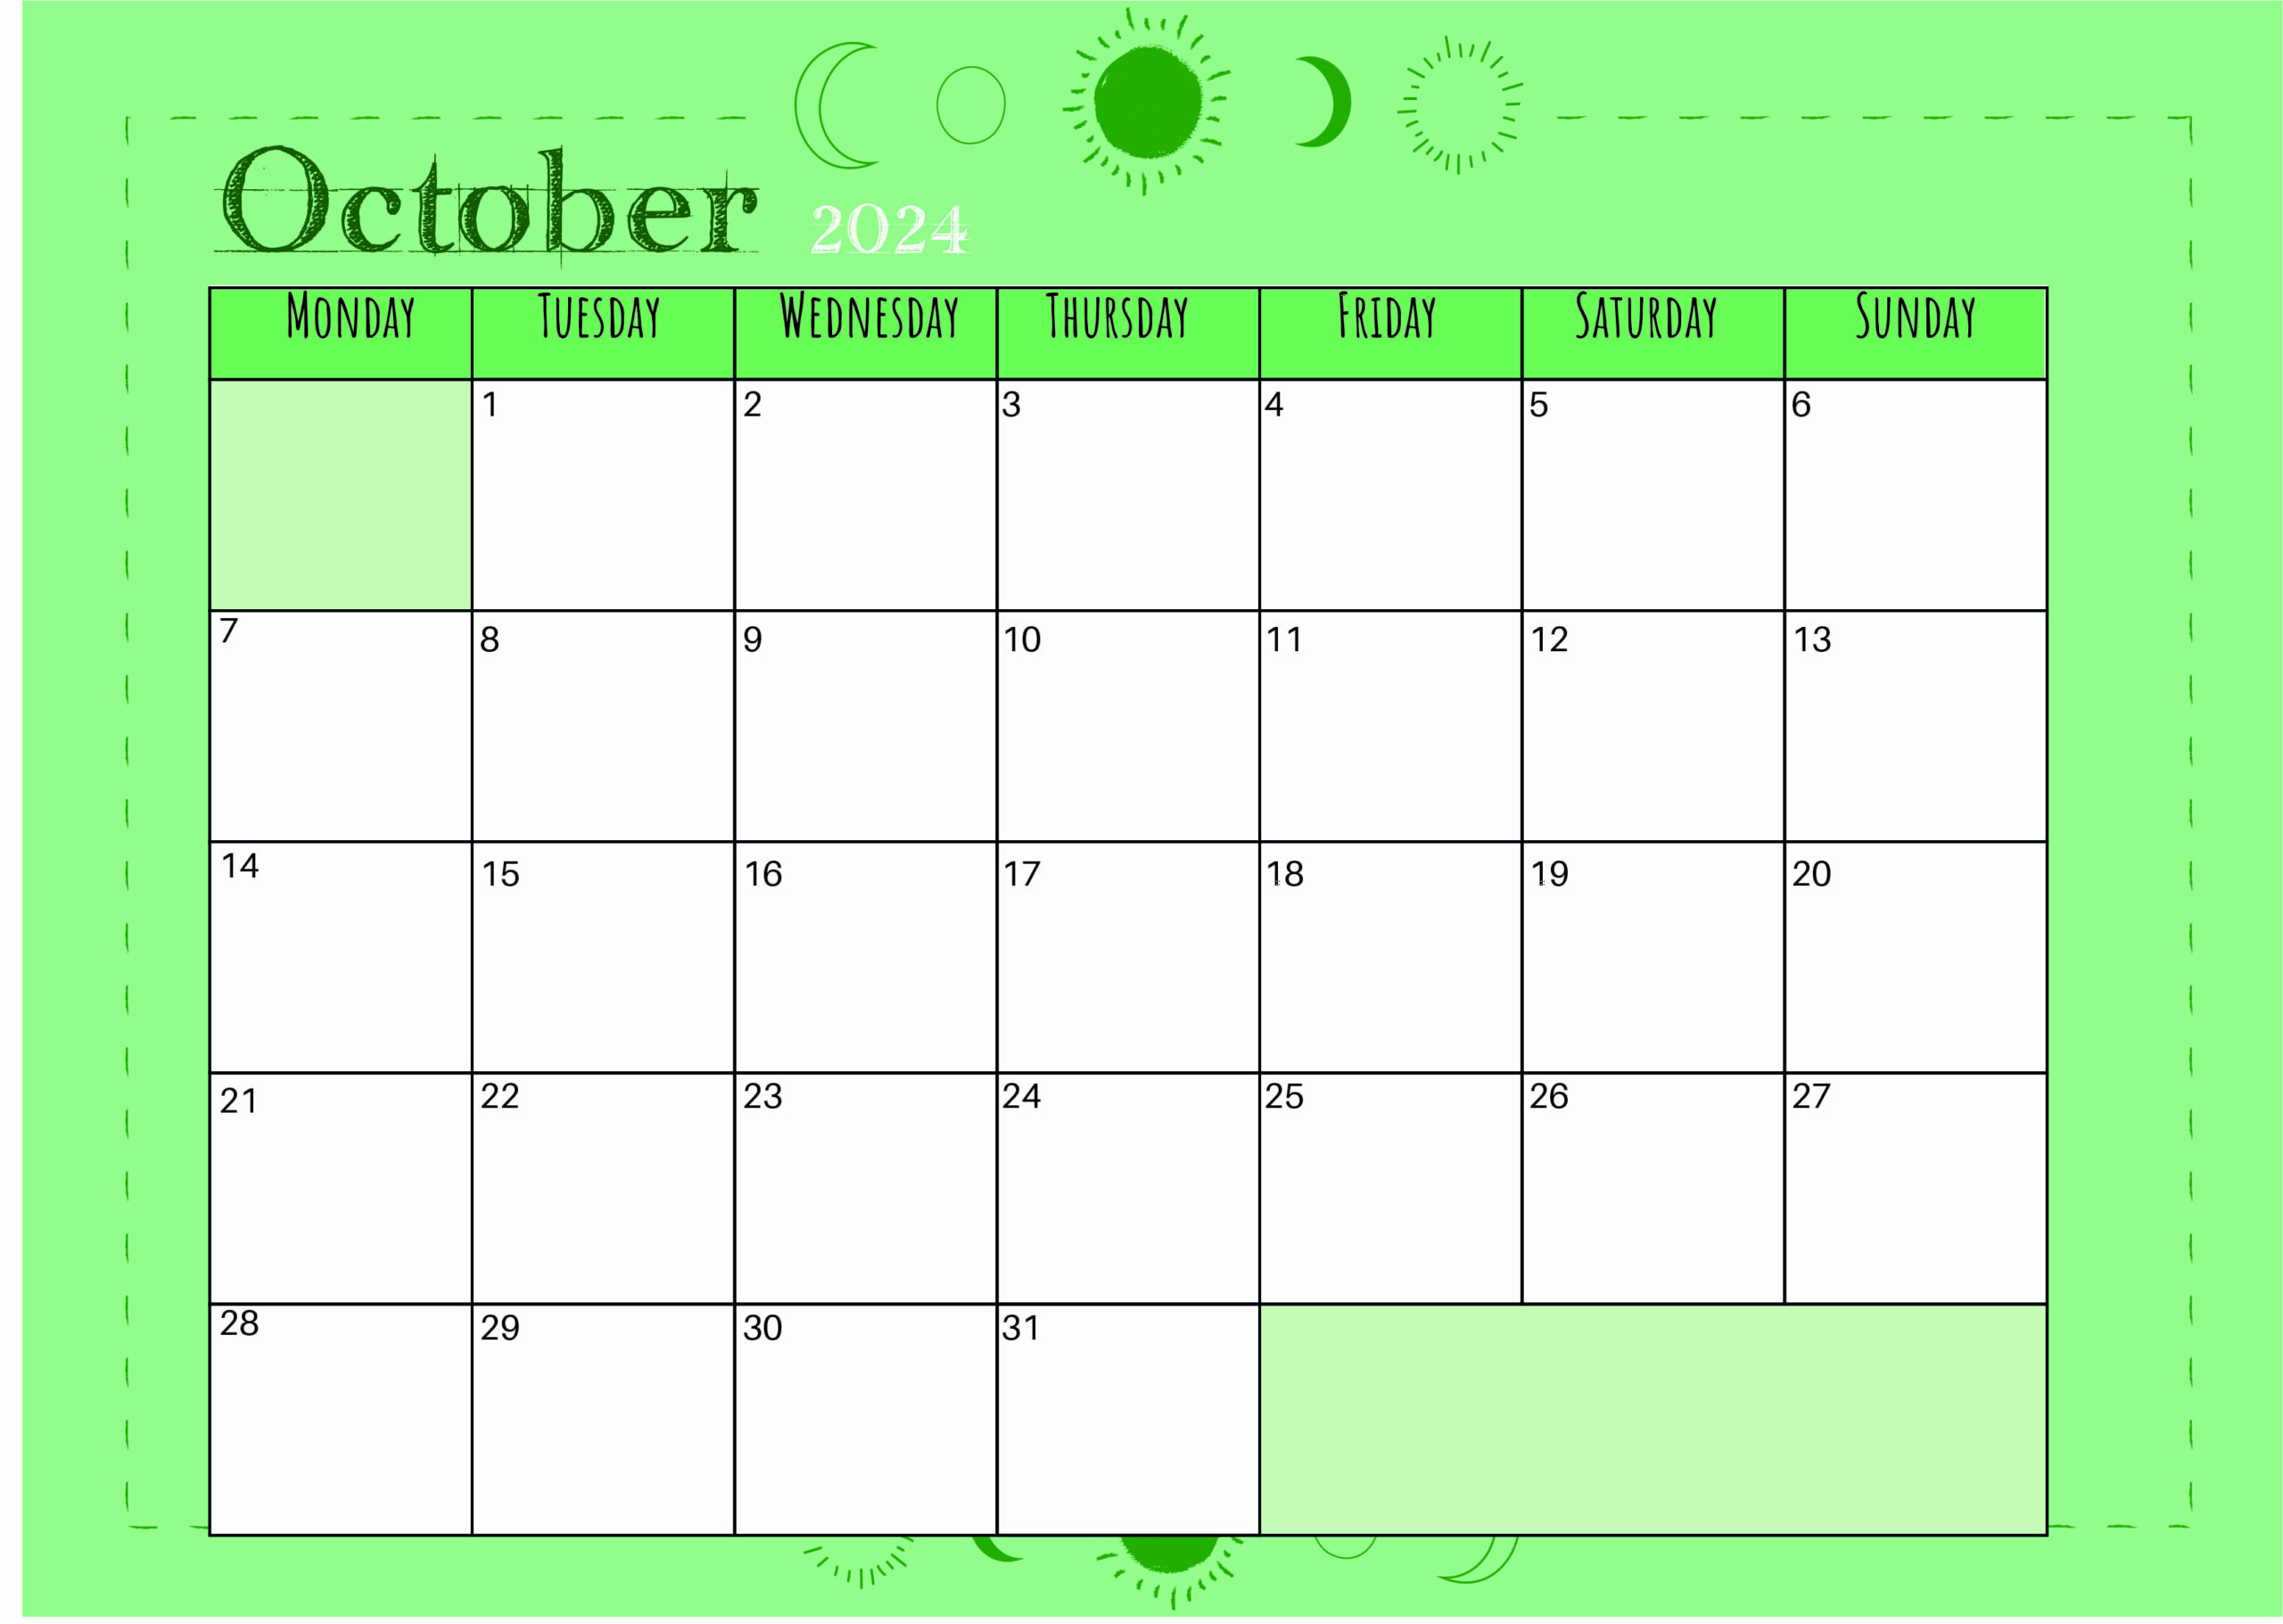 October 2024 Calendar for Printing